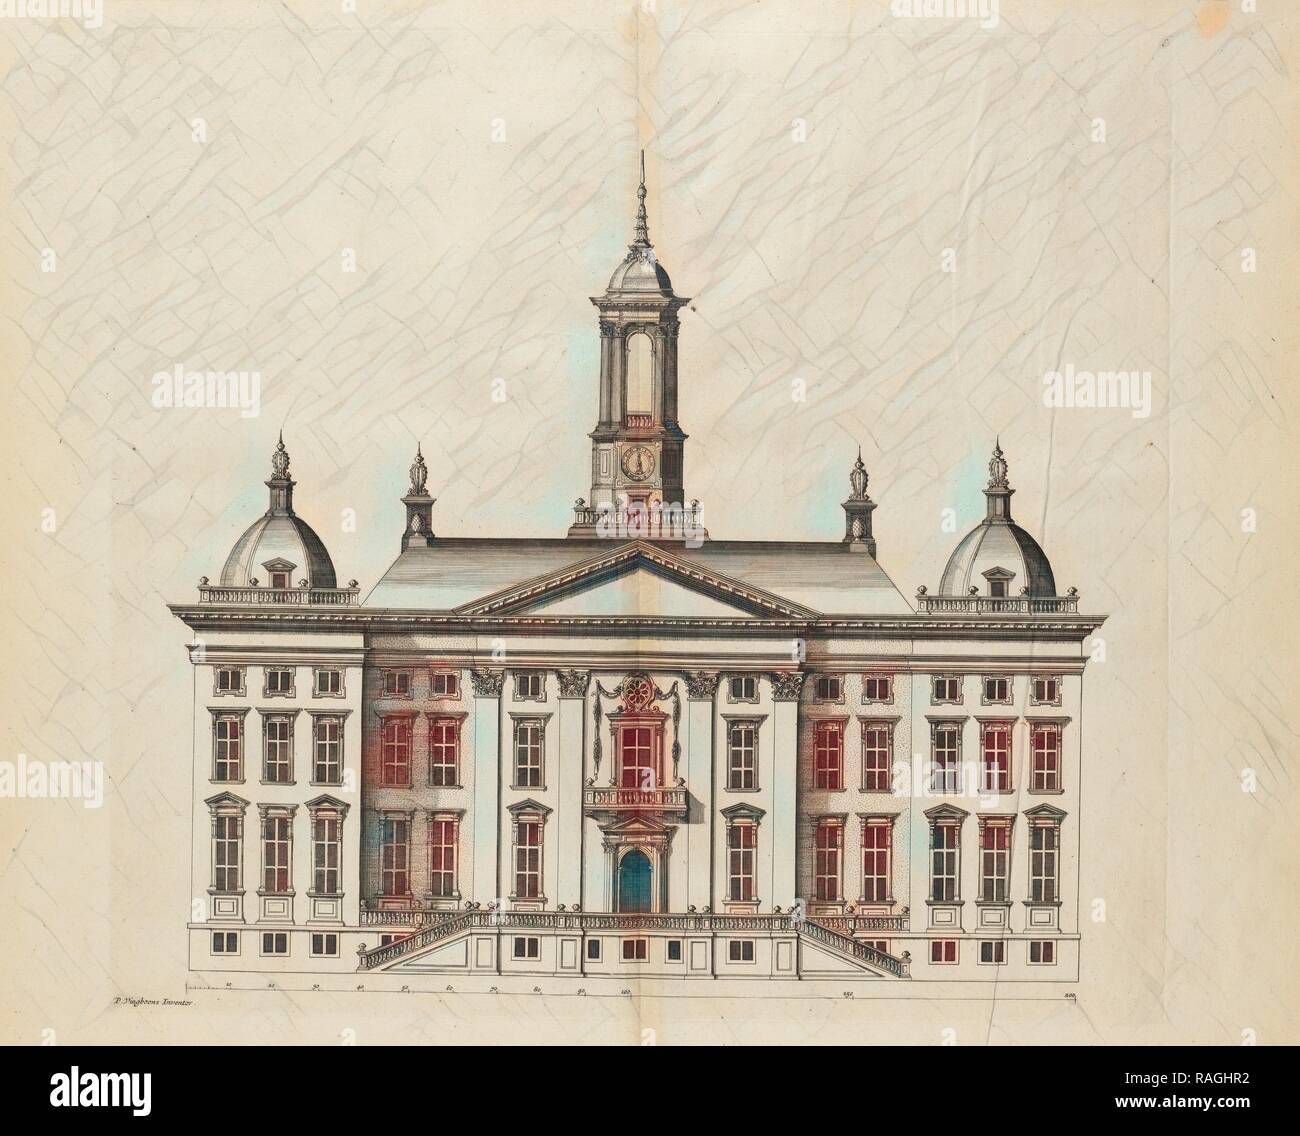 Design for a large home, Afbeeldsels der voornaamste gebouwen uit alle die Philips Vingboons geordineert heeft reimagined Stock Photo